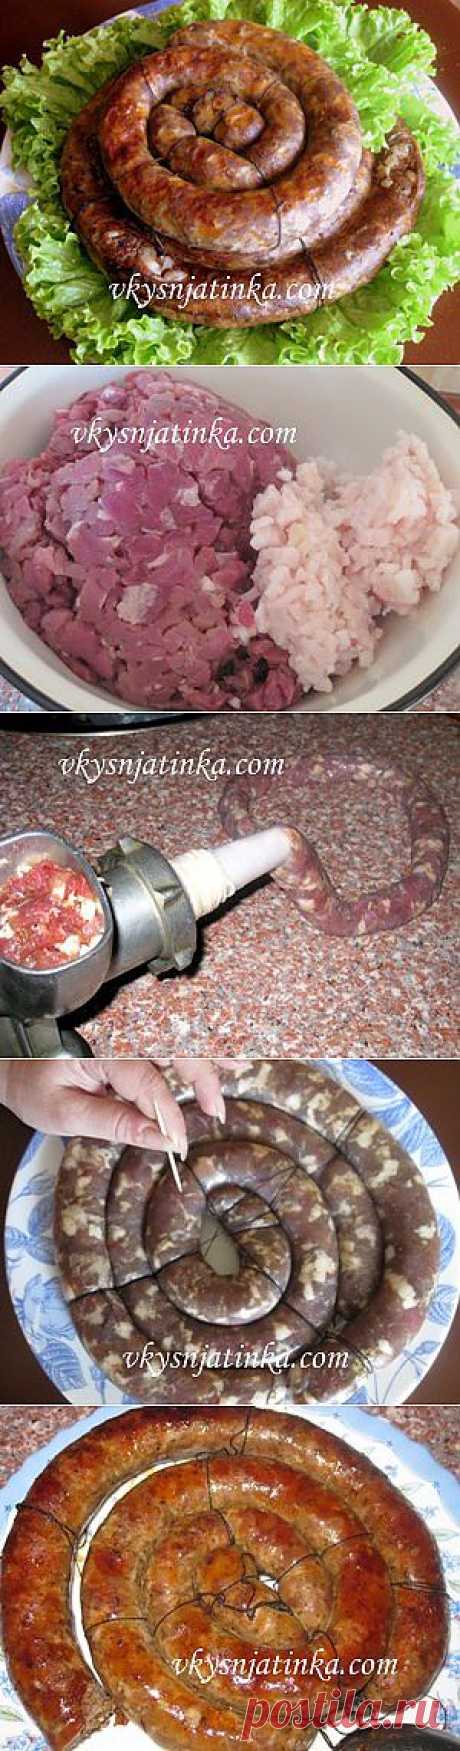 Домашняя колбаса - рецепт с фото